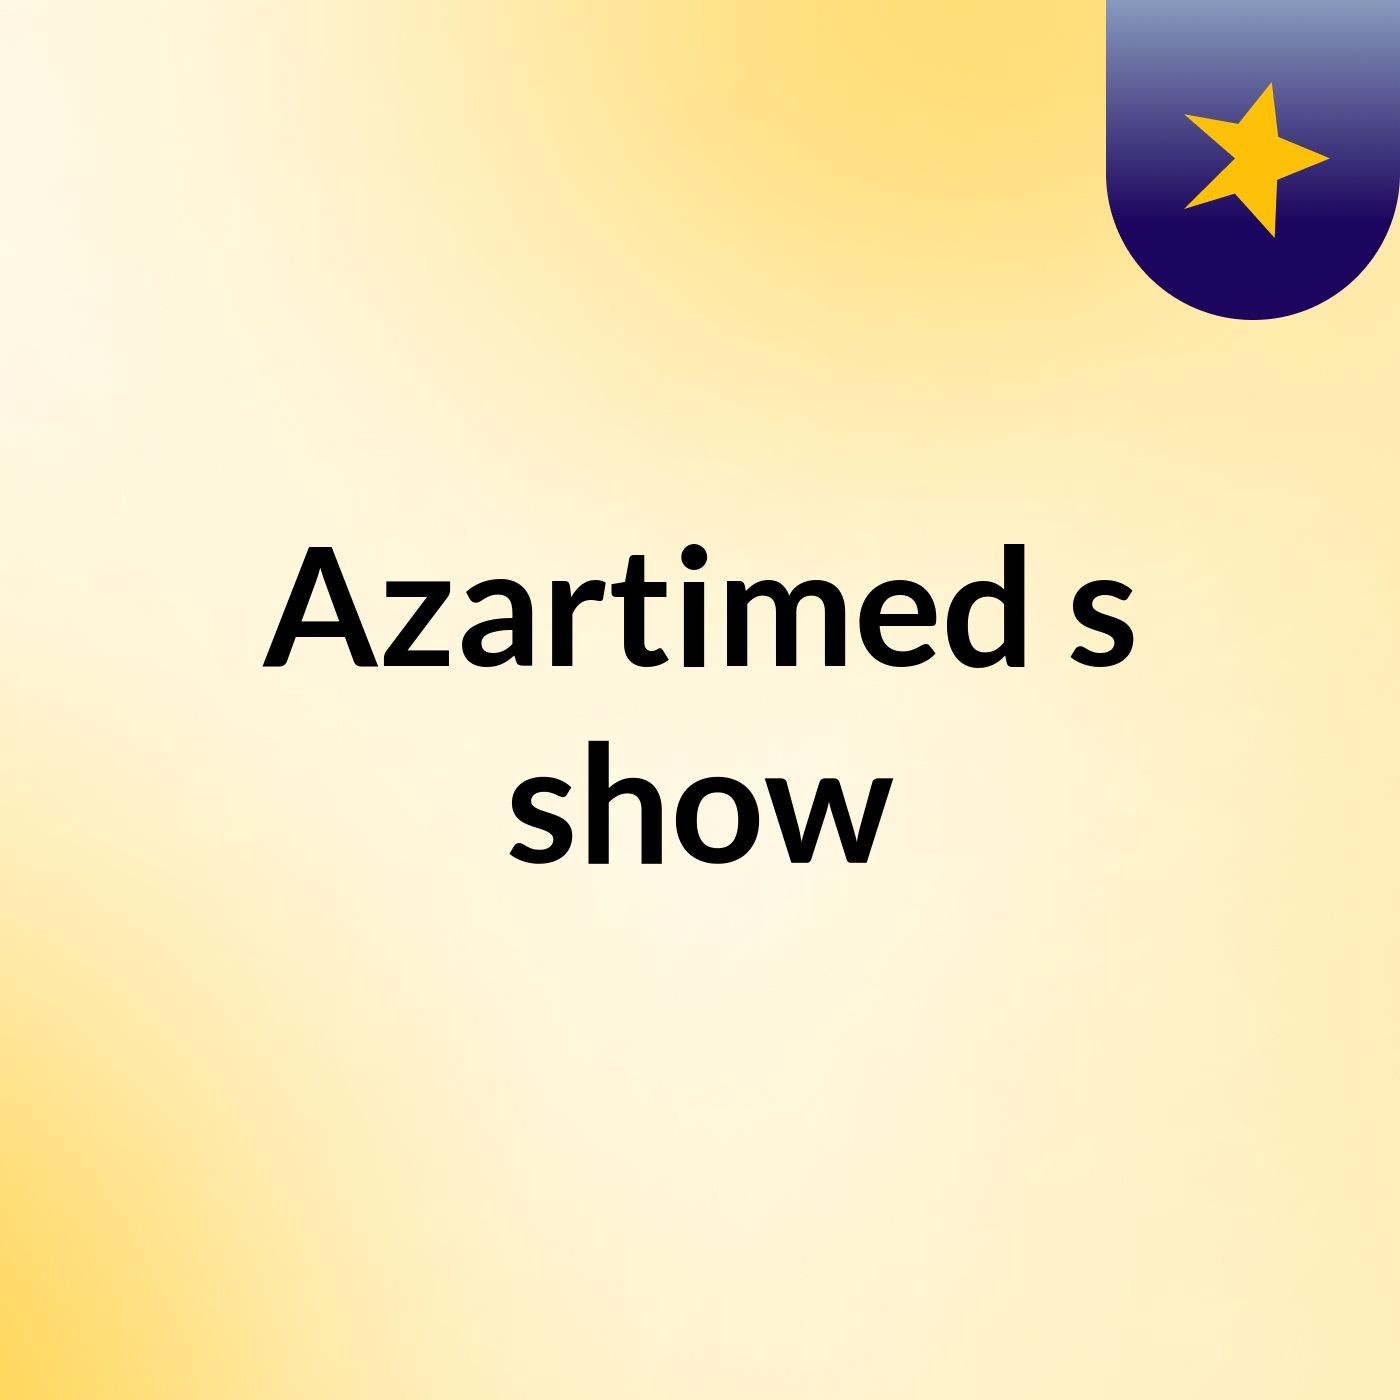 Azartimed's show